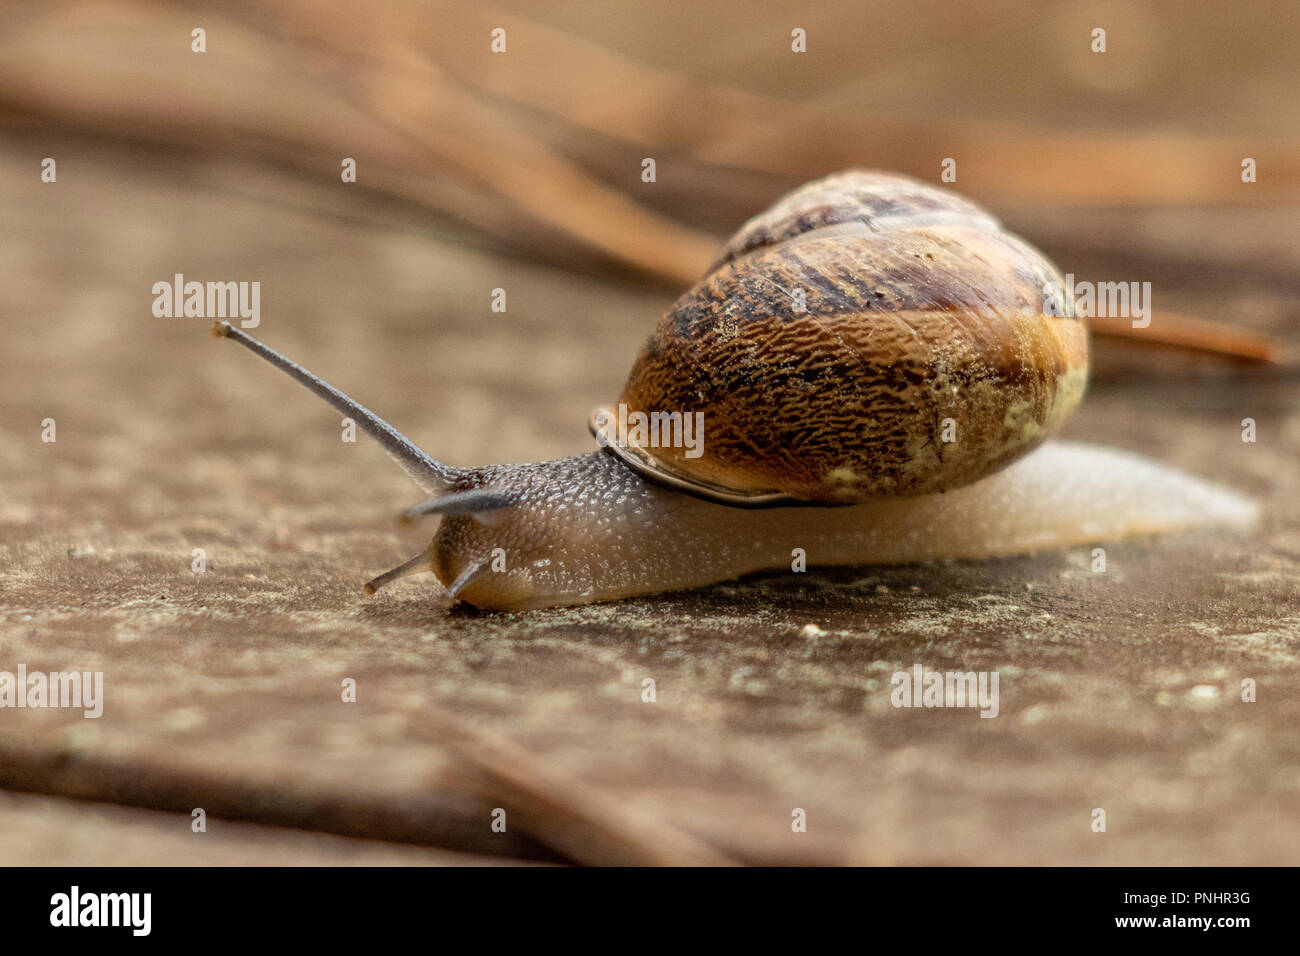 Cornu aspersum, known as the garden snail, is a species of land snail. As  such it is a terrestrial pulmonate gastropod mollusk. Rainy day Stock Photo  - Alamy